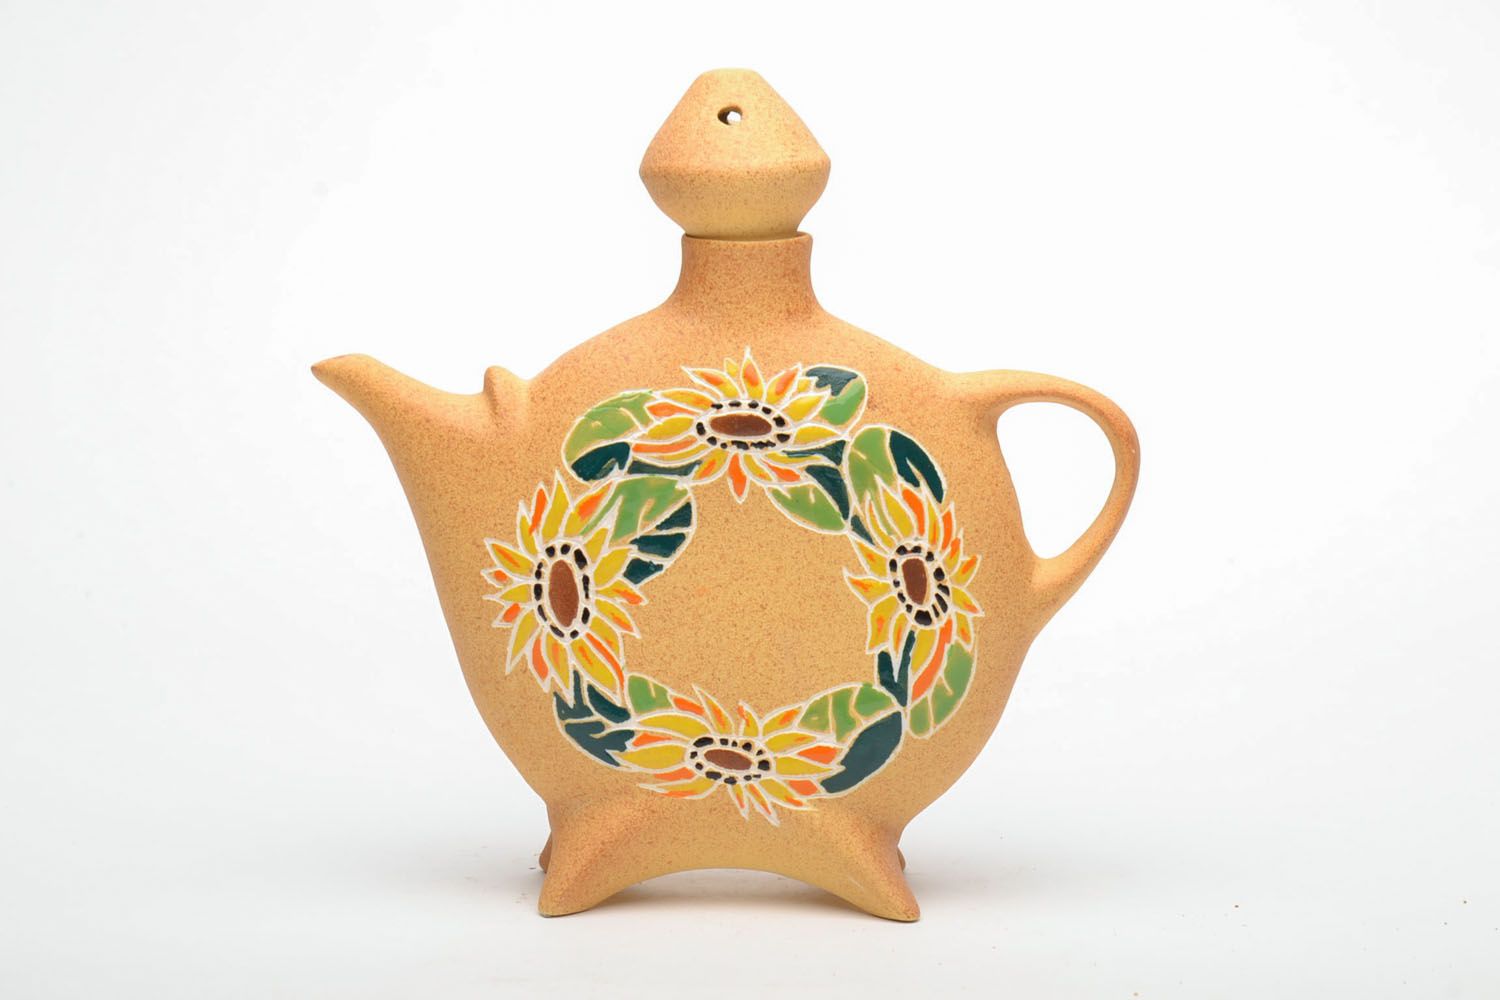 Homemade ceramic teapot photo 2